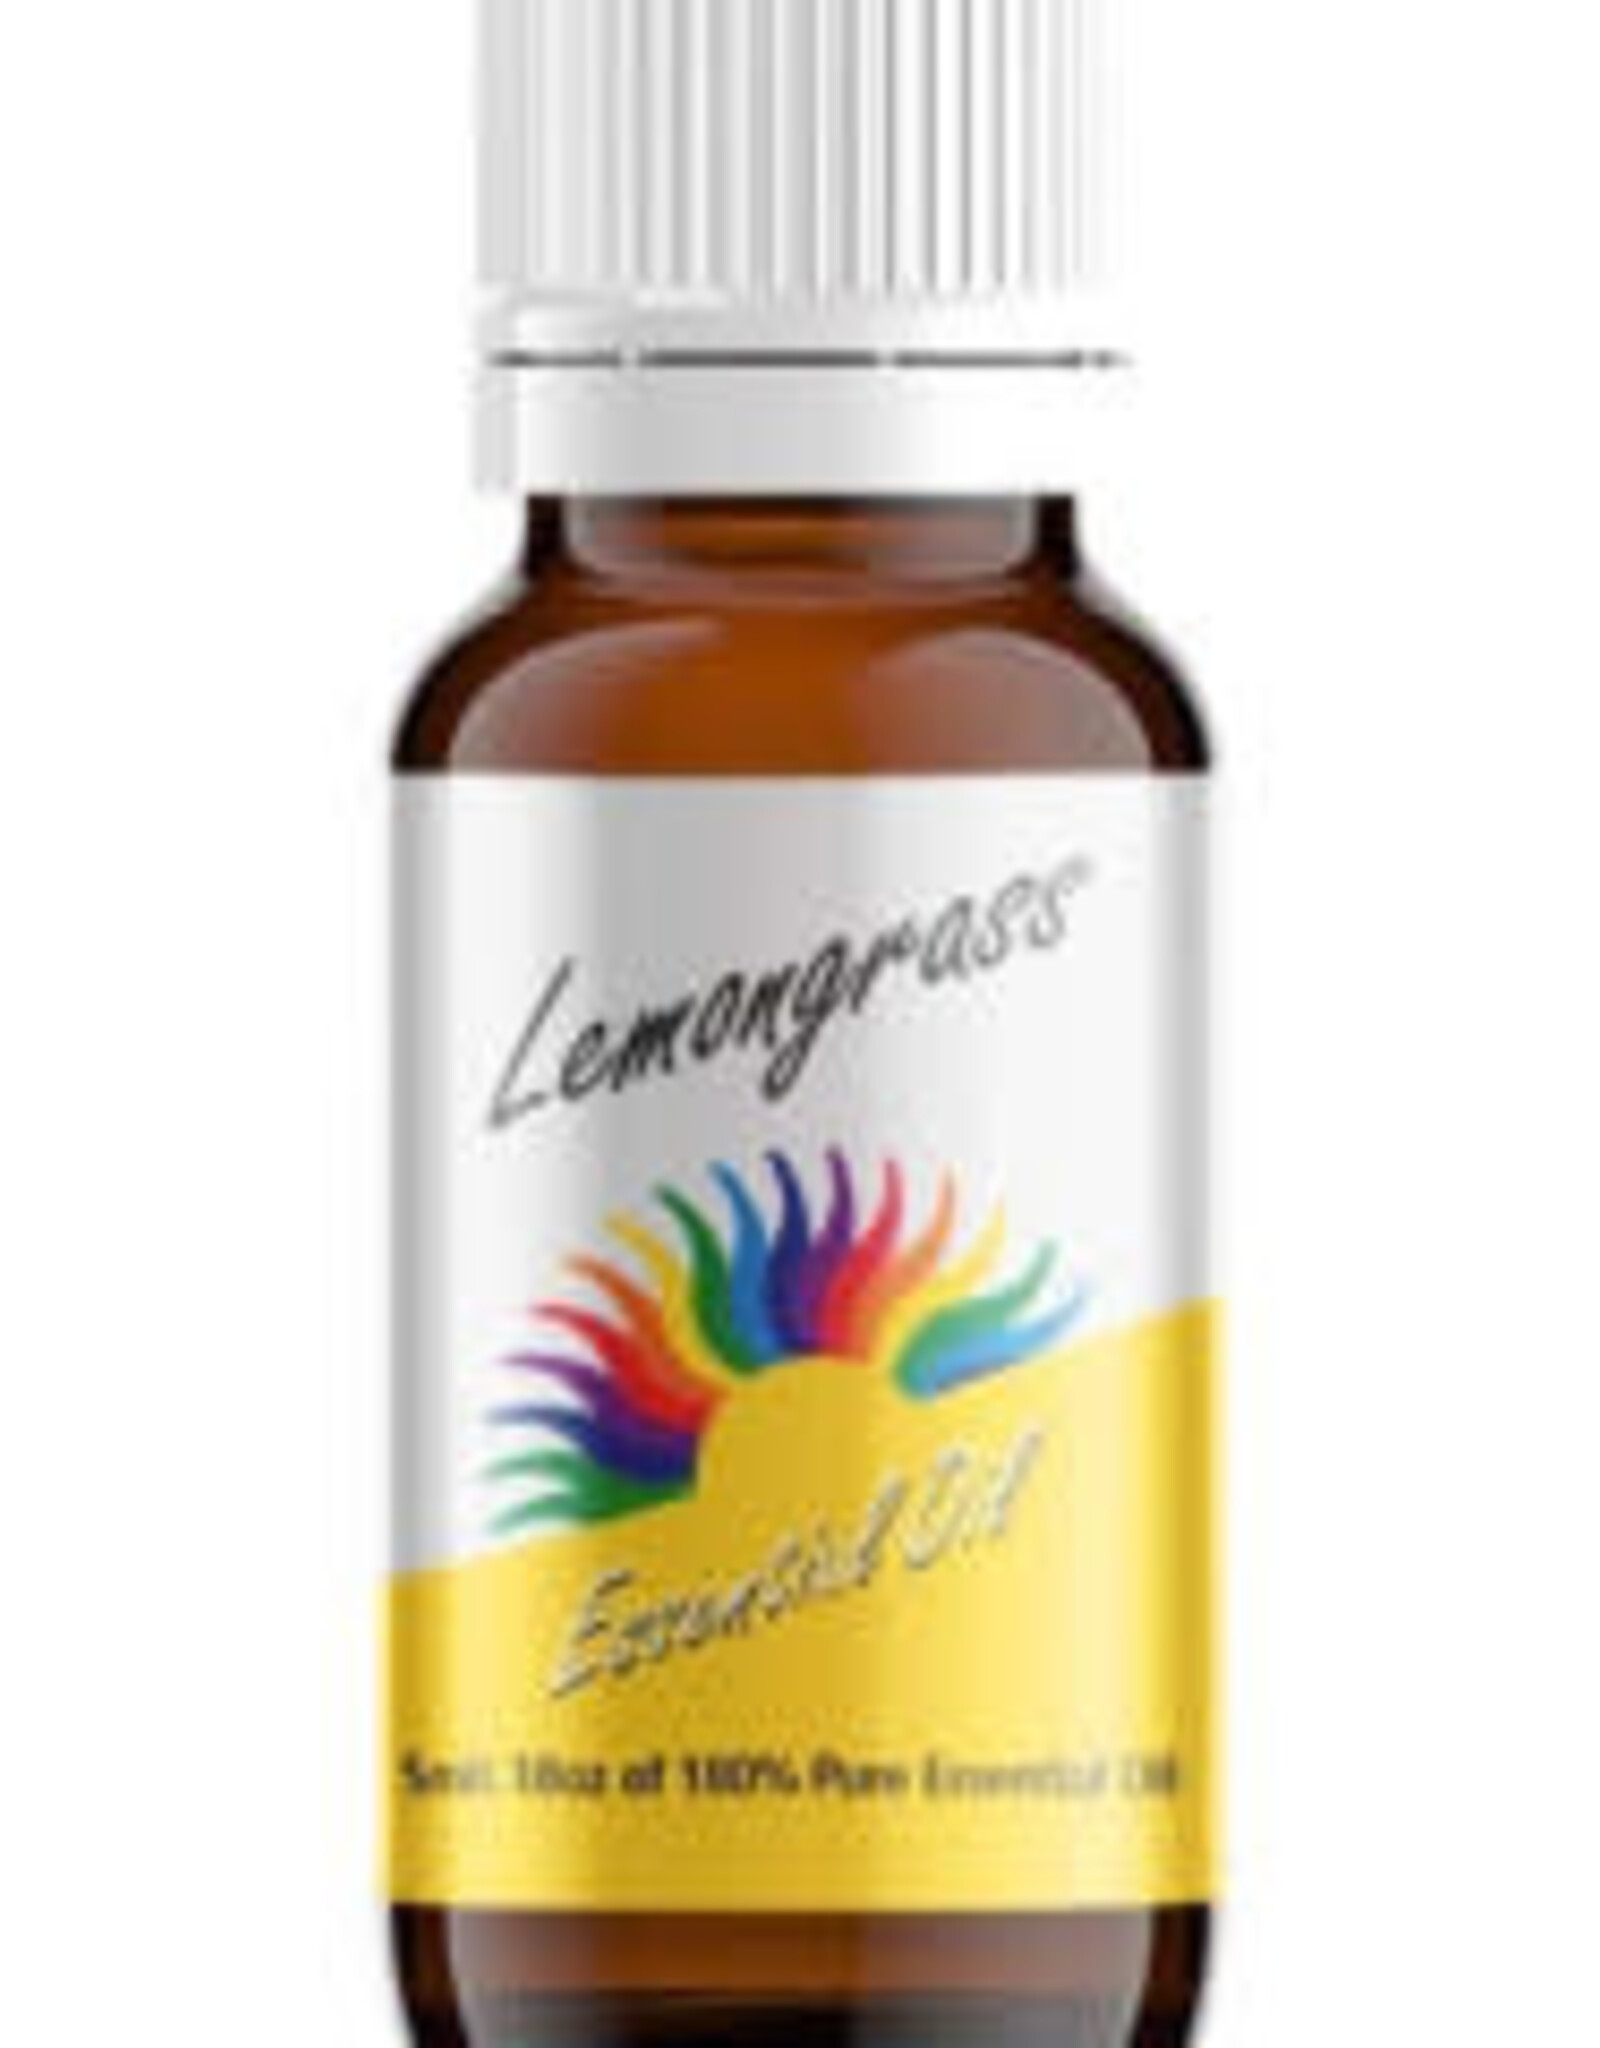 Colour Energy Lemongrass Essential Oil 5ml